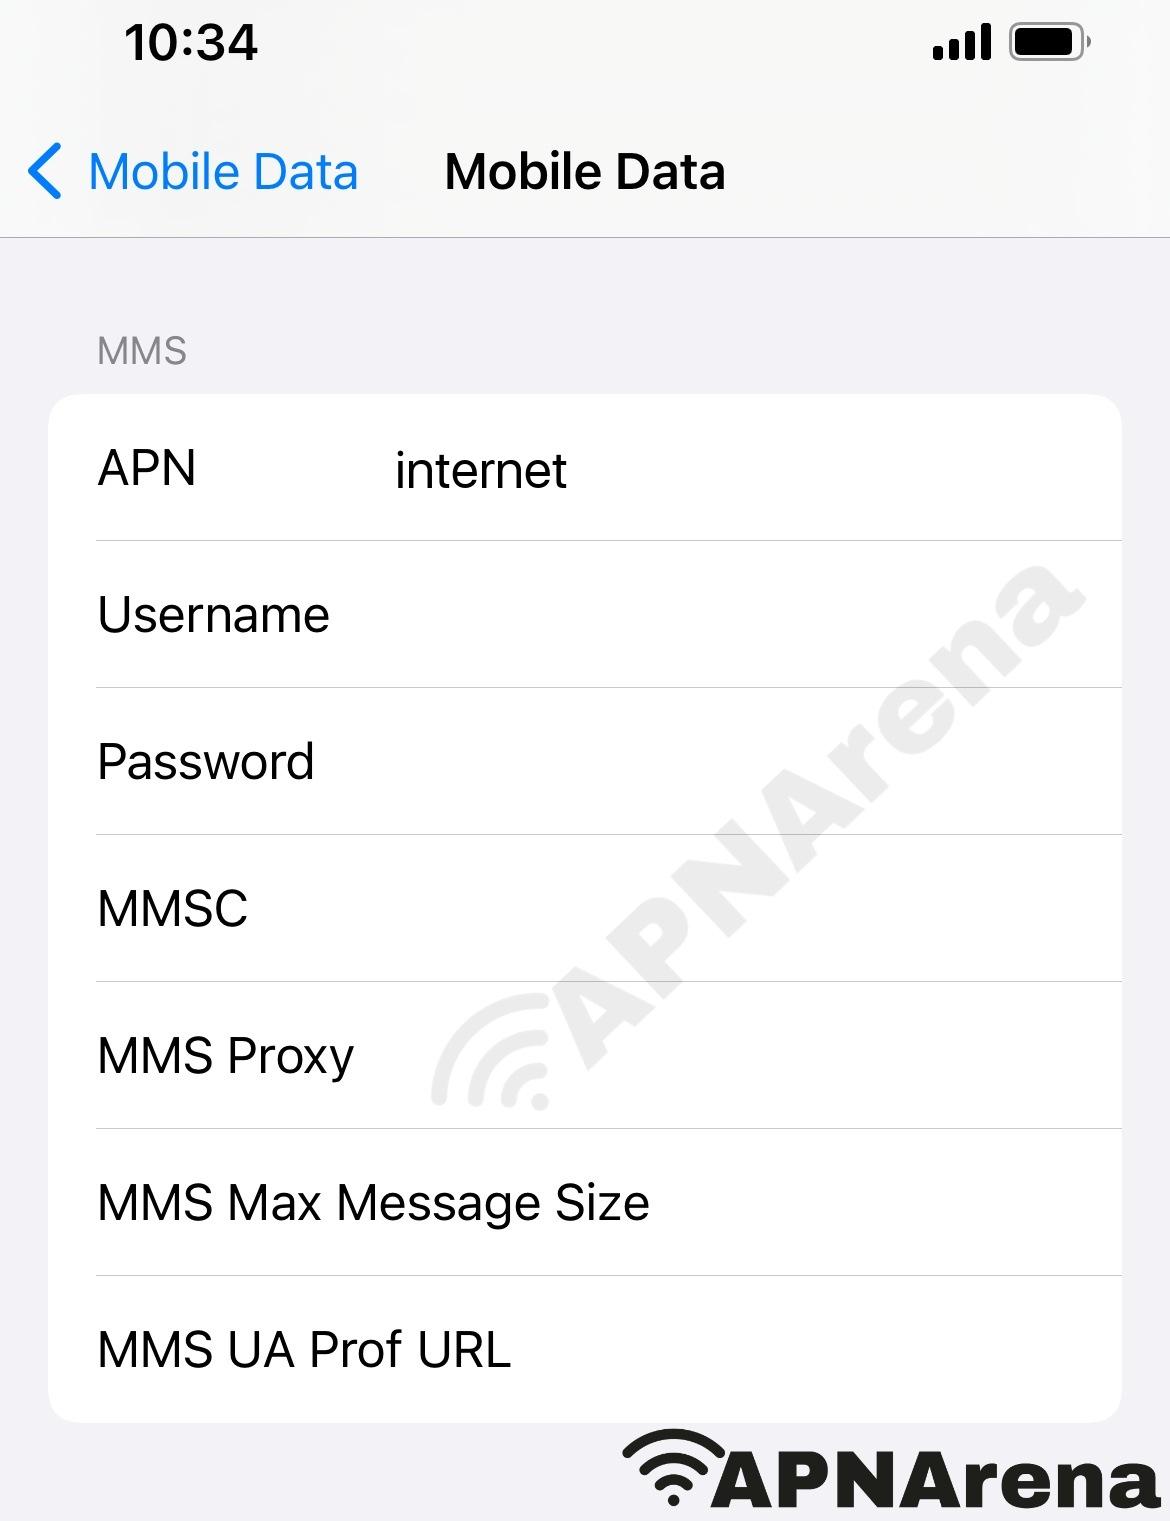 GoSmart Mobile MMS Settings for iPhone